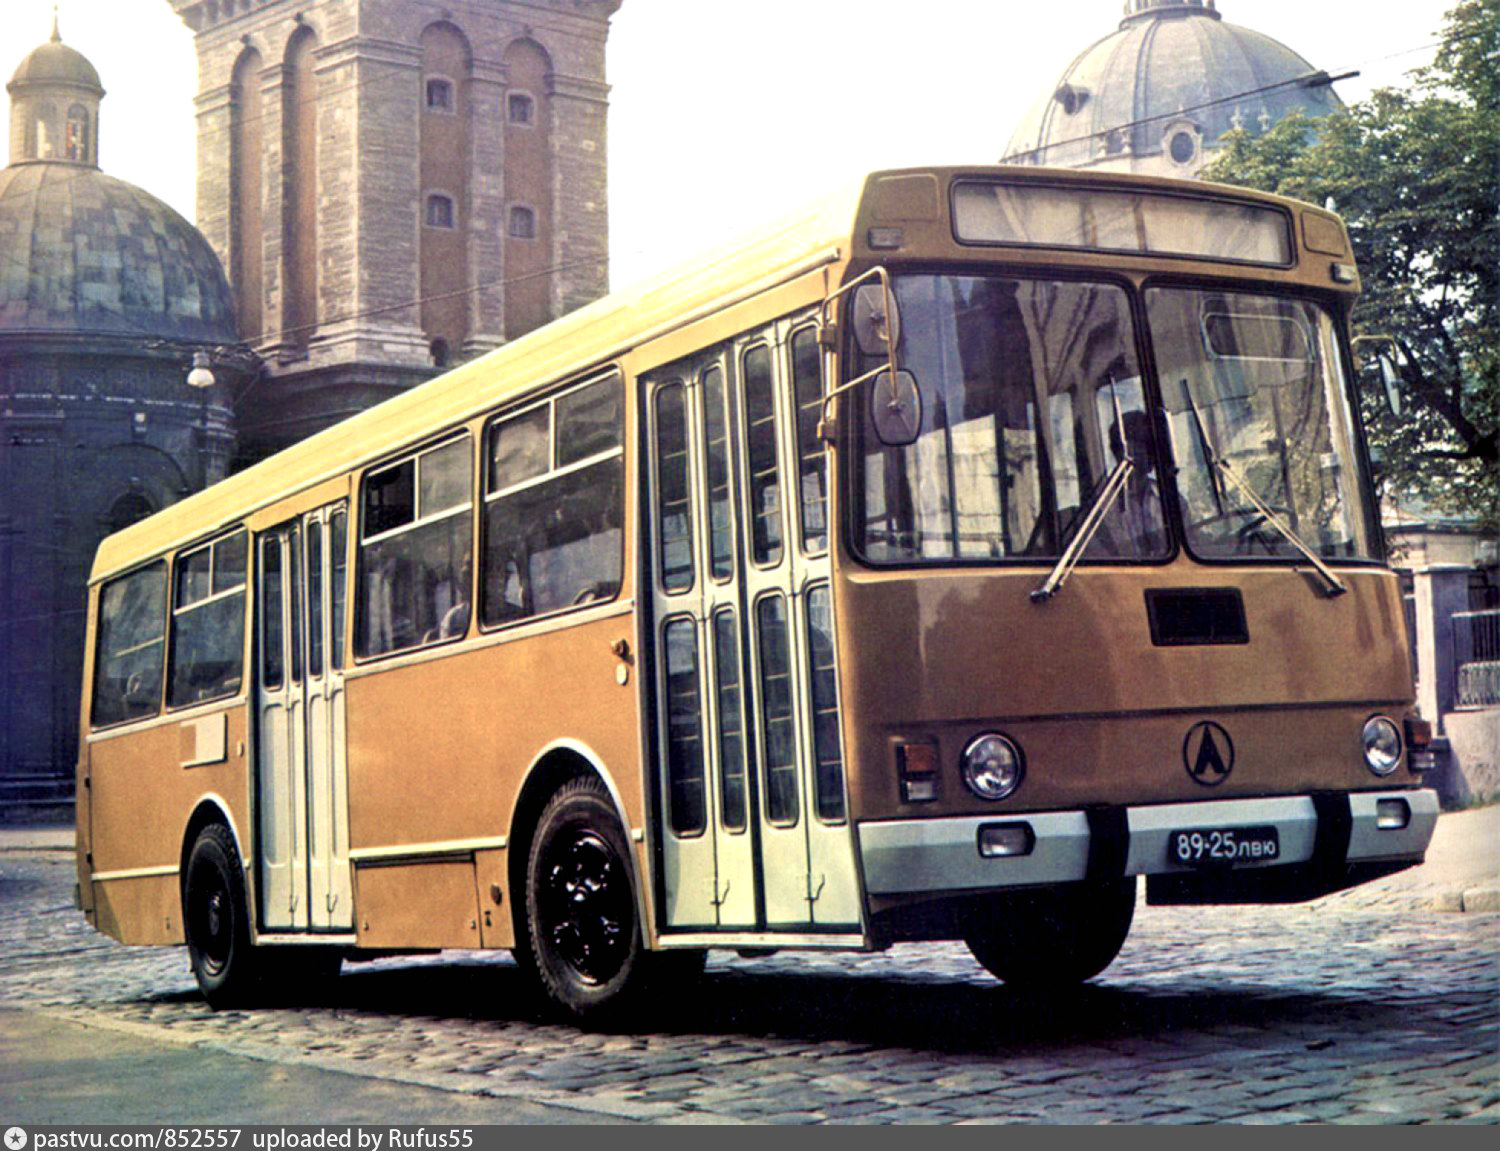 Советский общественный транспорт. ЛАЗ 4202 Модимио. ЛАЗ-4202 автобус. Советский автобус ЛАЗ 4202. ЛАЗ 4202 И ЛАЗ 695н.